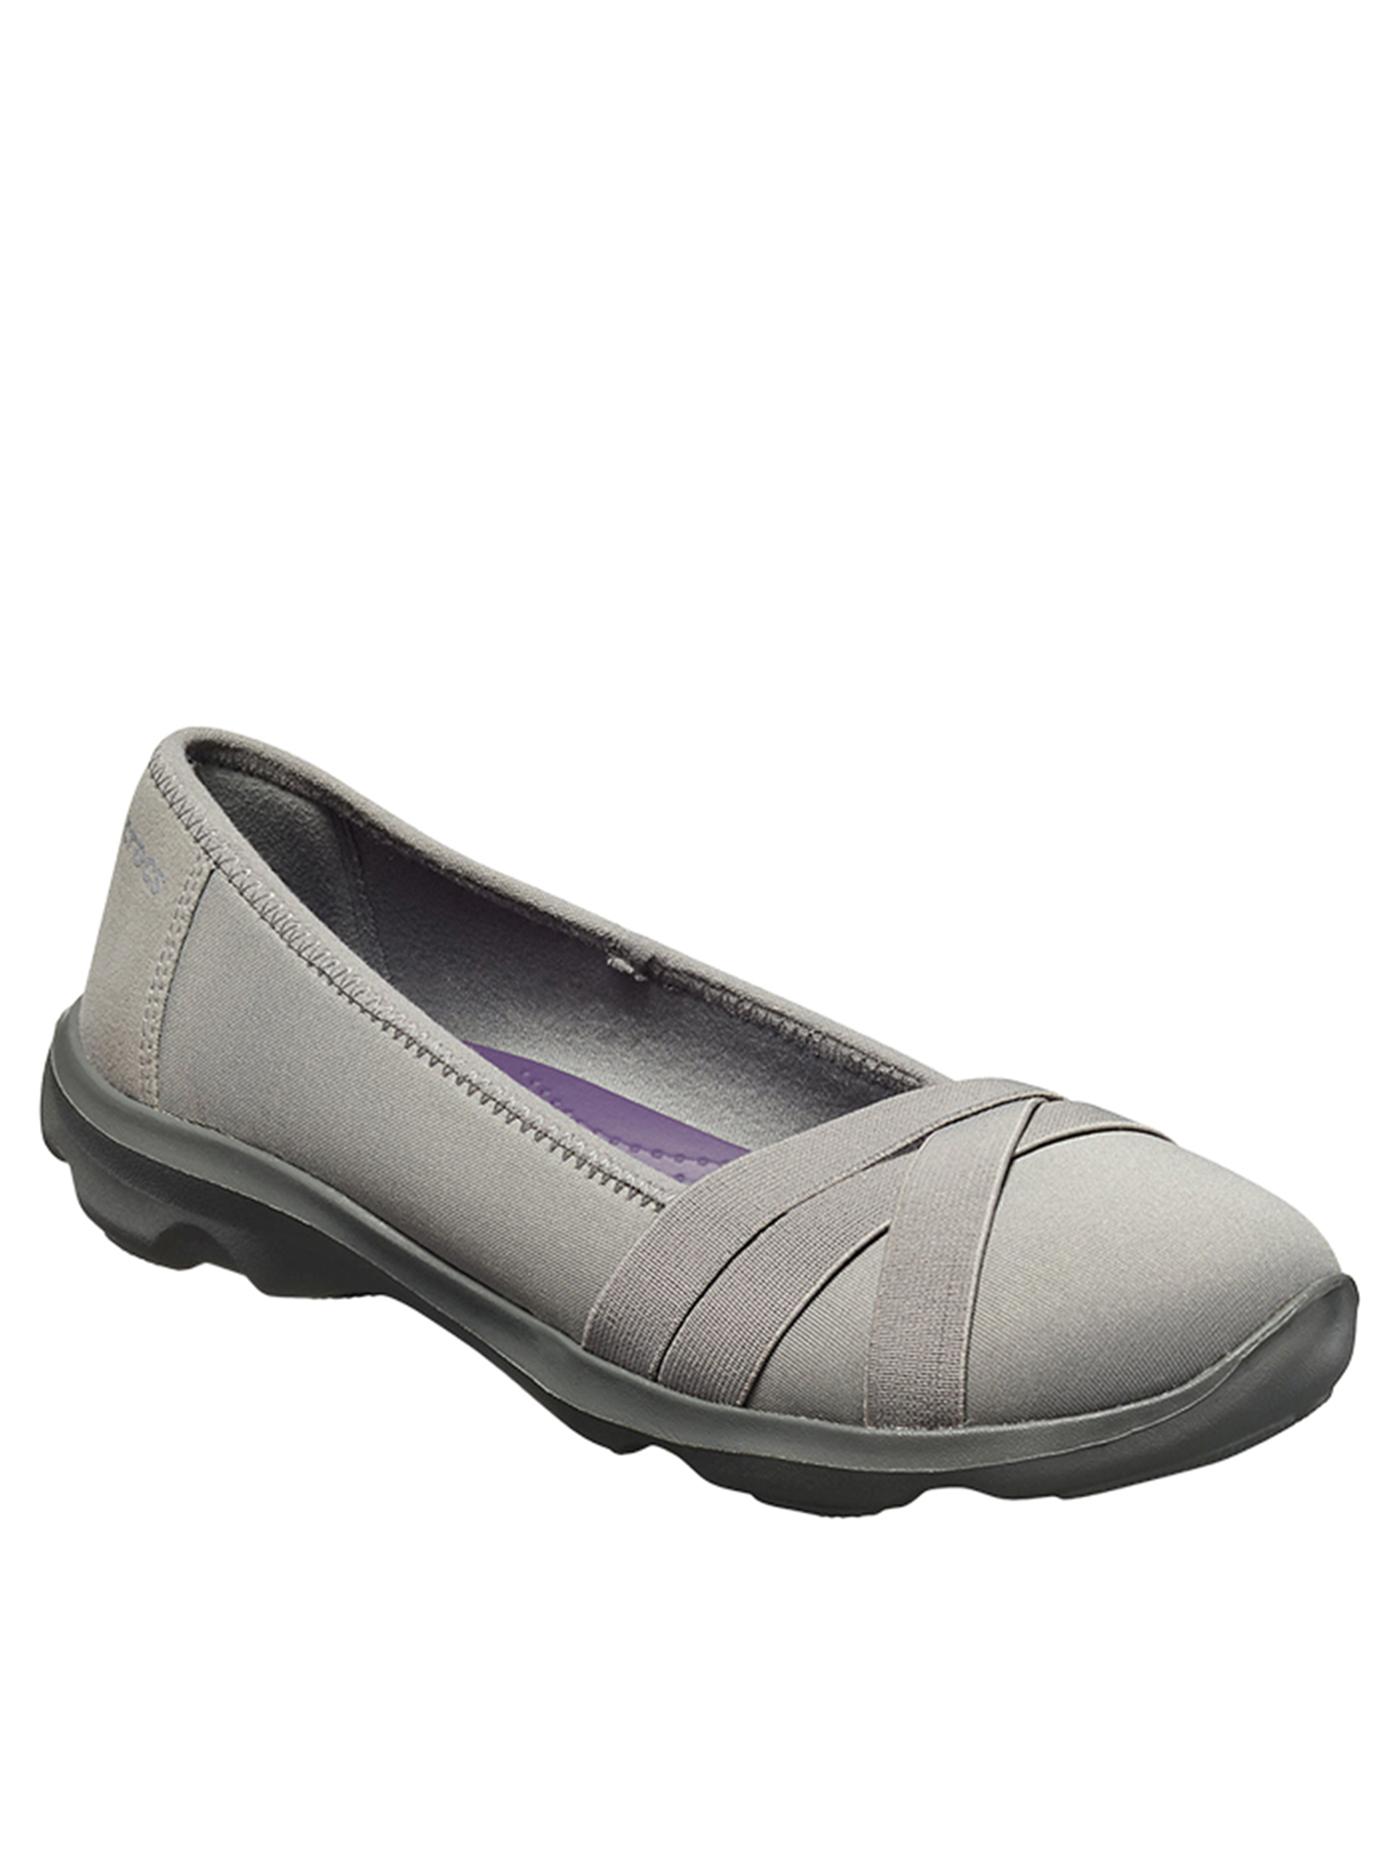 CROCS รองเท้าลำลองผู้หญิง  Busy Day Strappy Flat BD STP FLT ไซส์ W9 _สีSmoke-Slate Grey